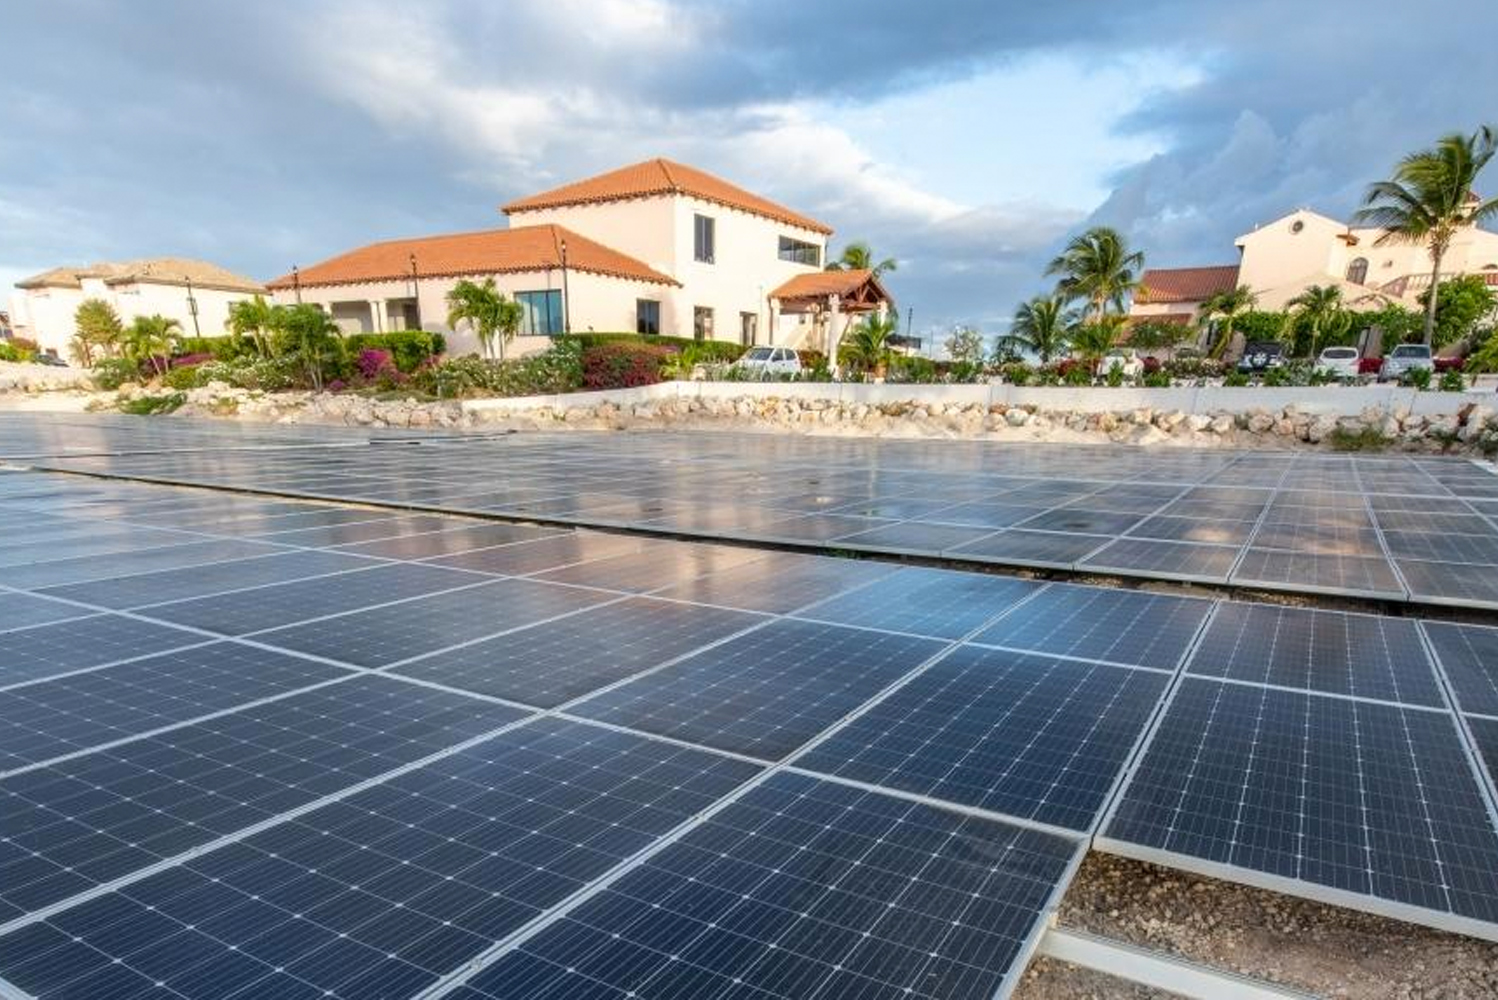 Frangipani Beach Resort goes green with new solar energy system